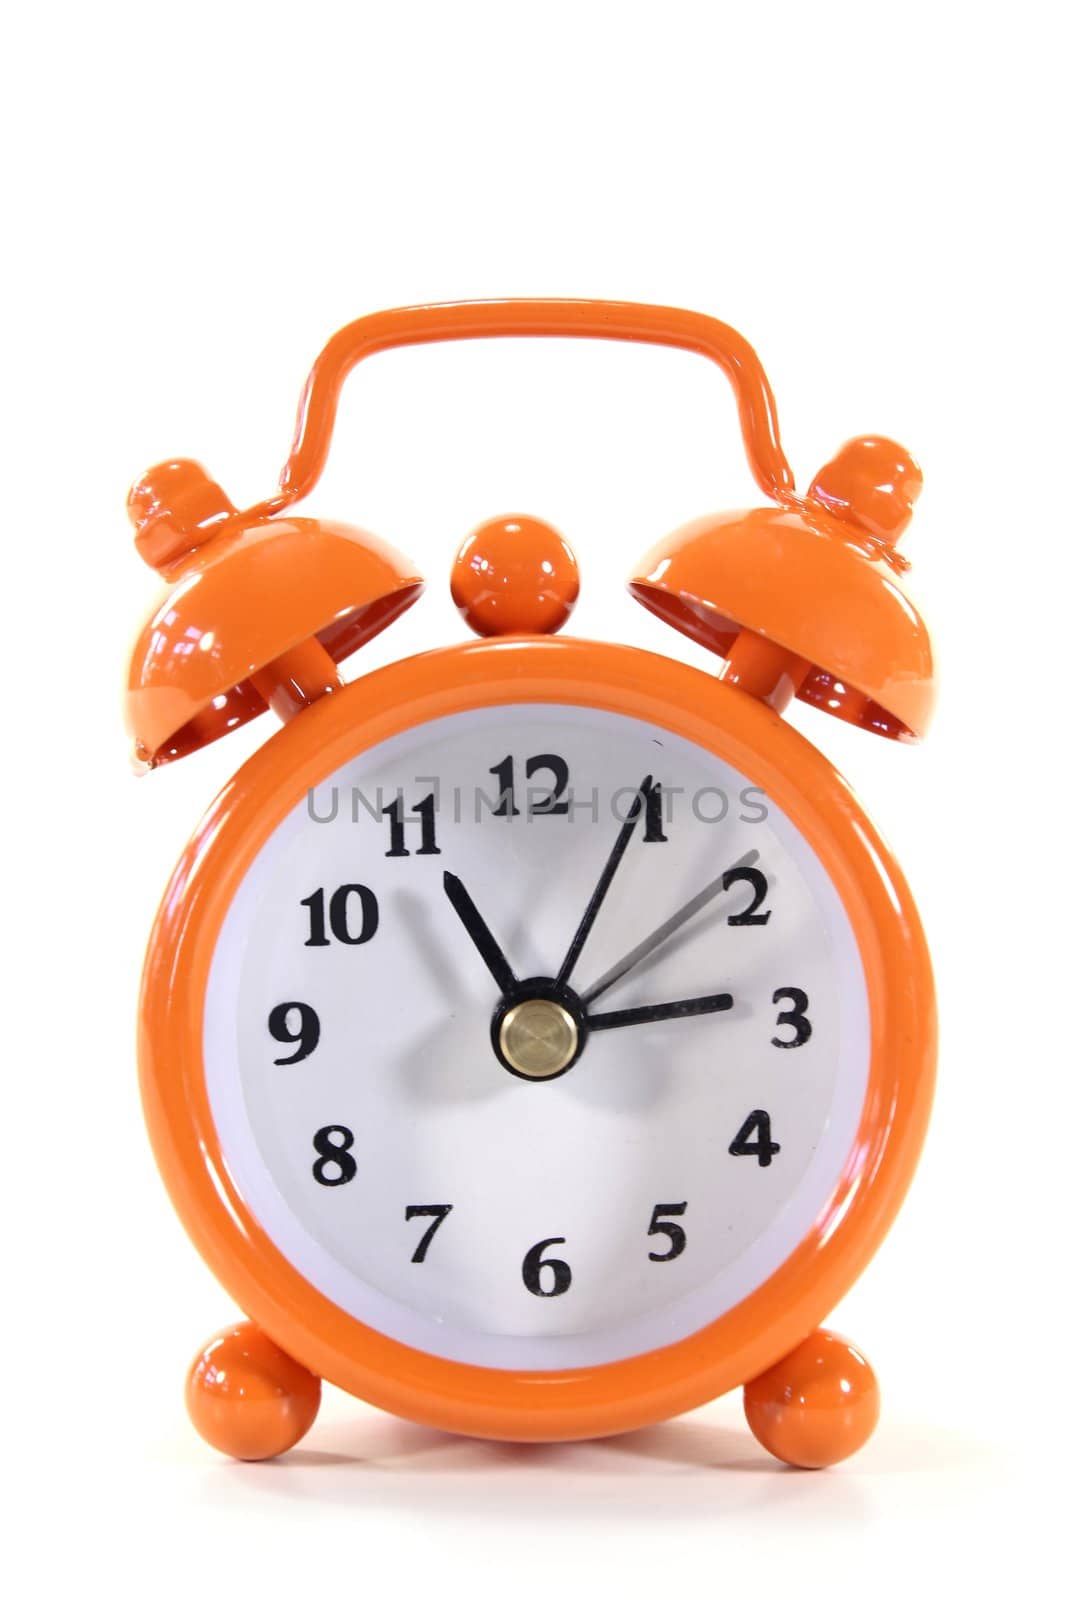 an orange clock on a white background